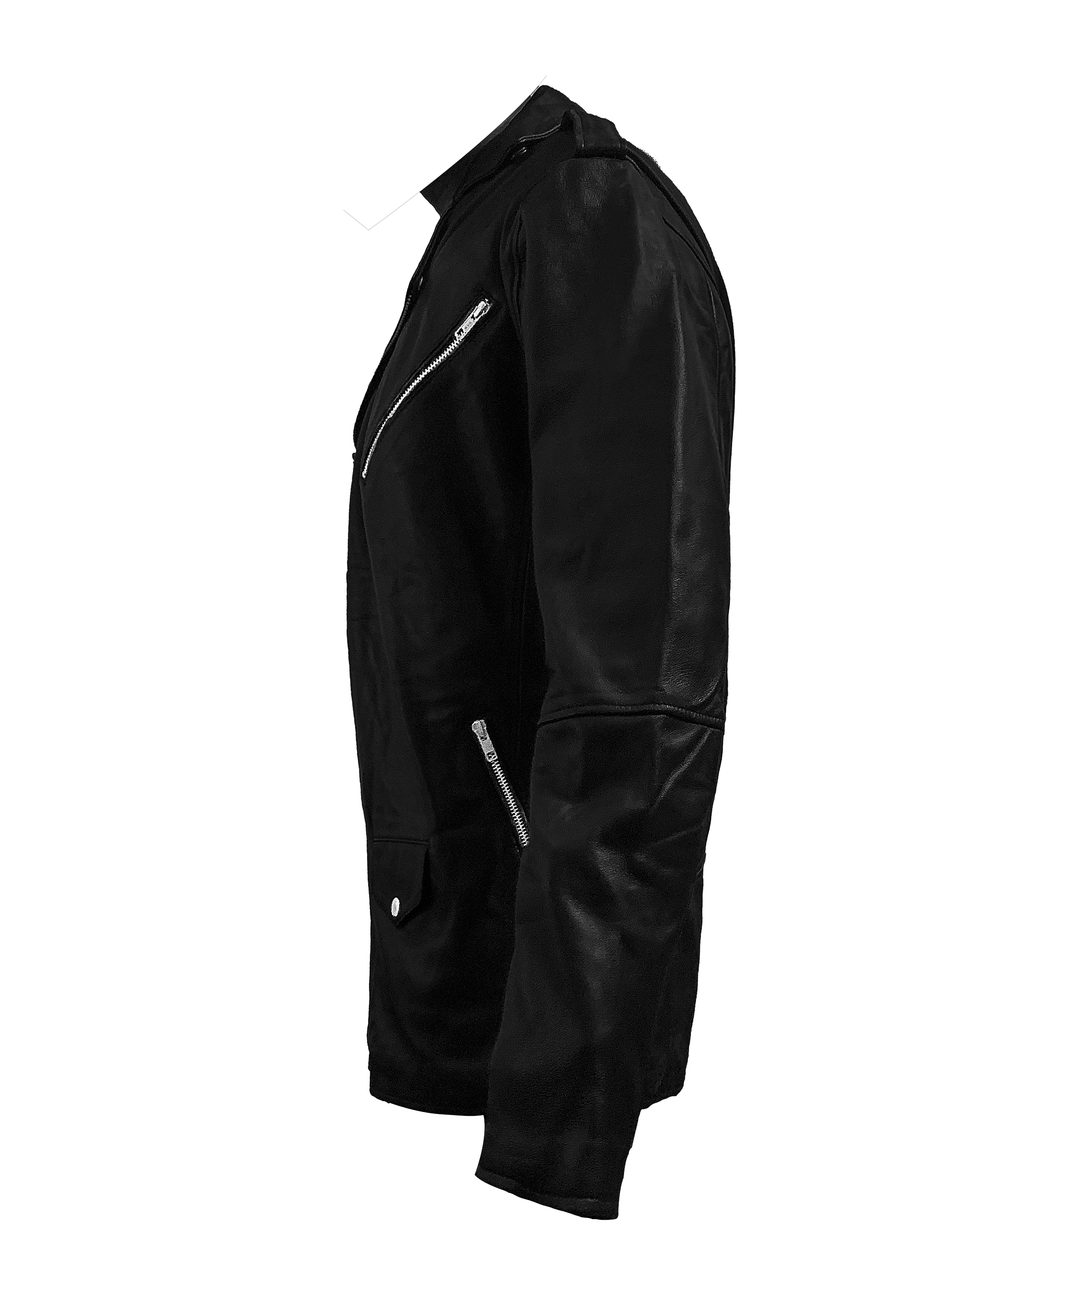 Black Leather Coat Online